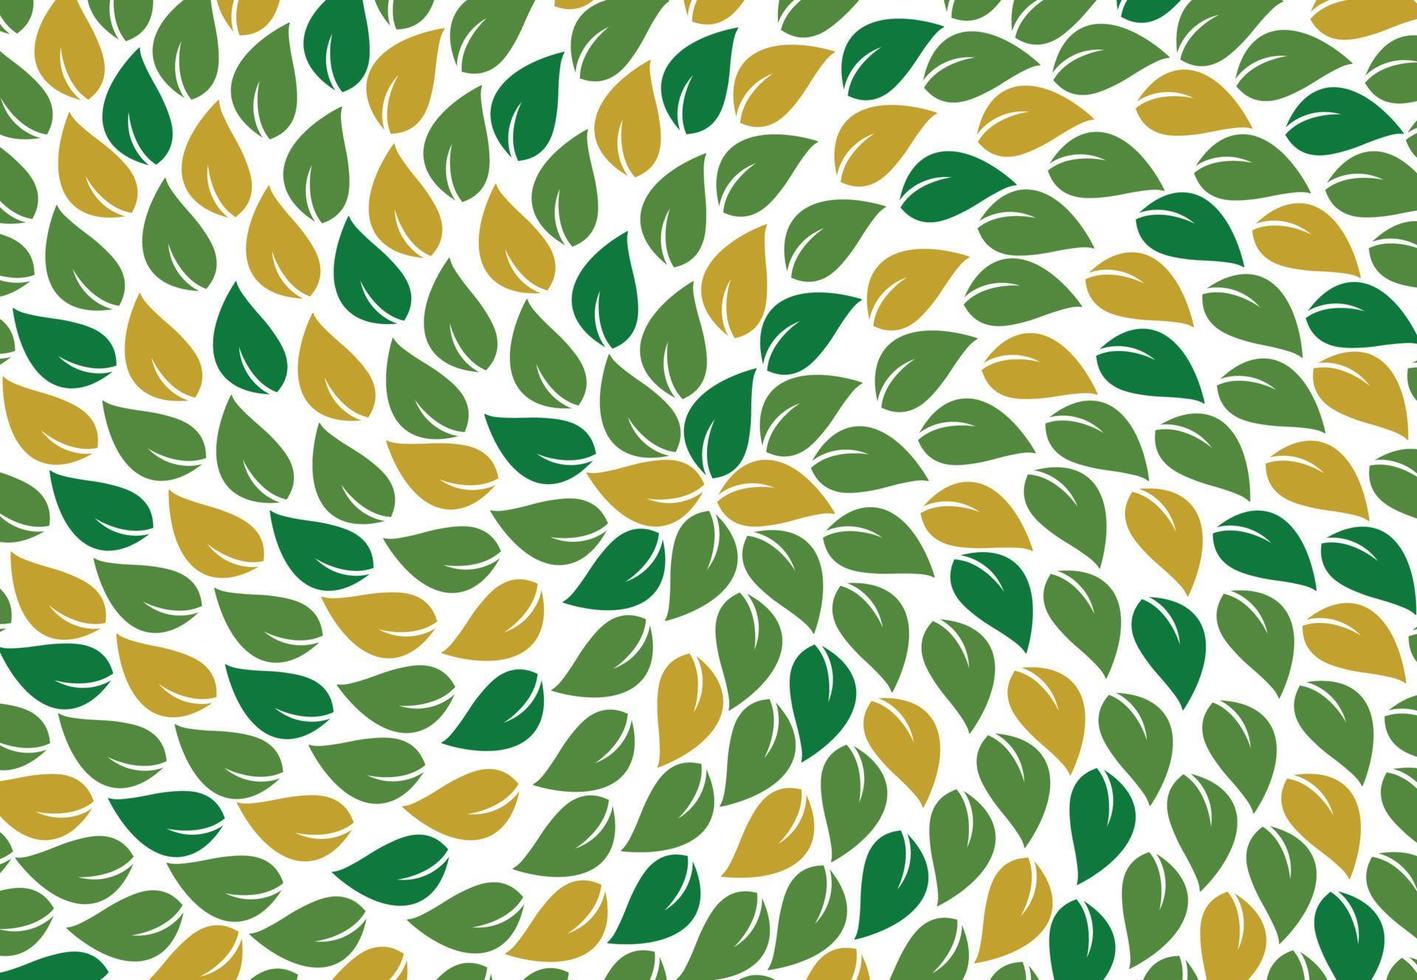 Leaves background pattern design. Hand drawn outline for banner, card. Vector illustration